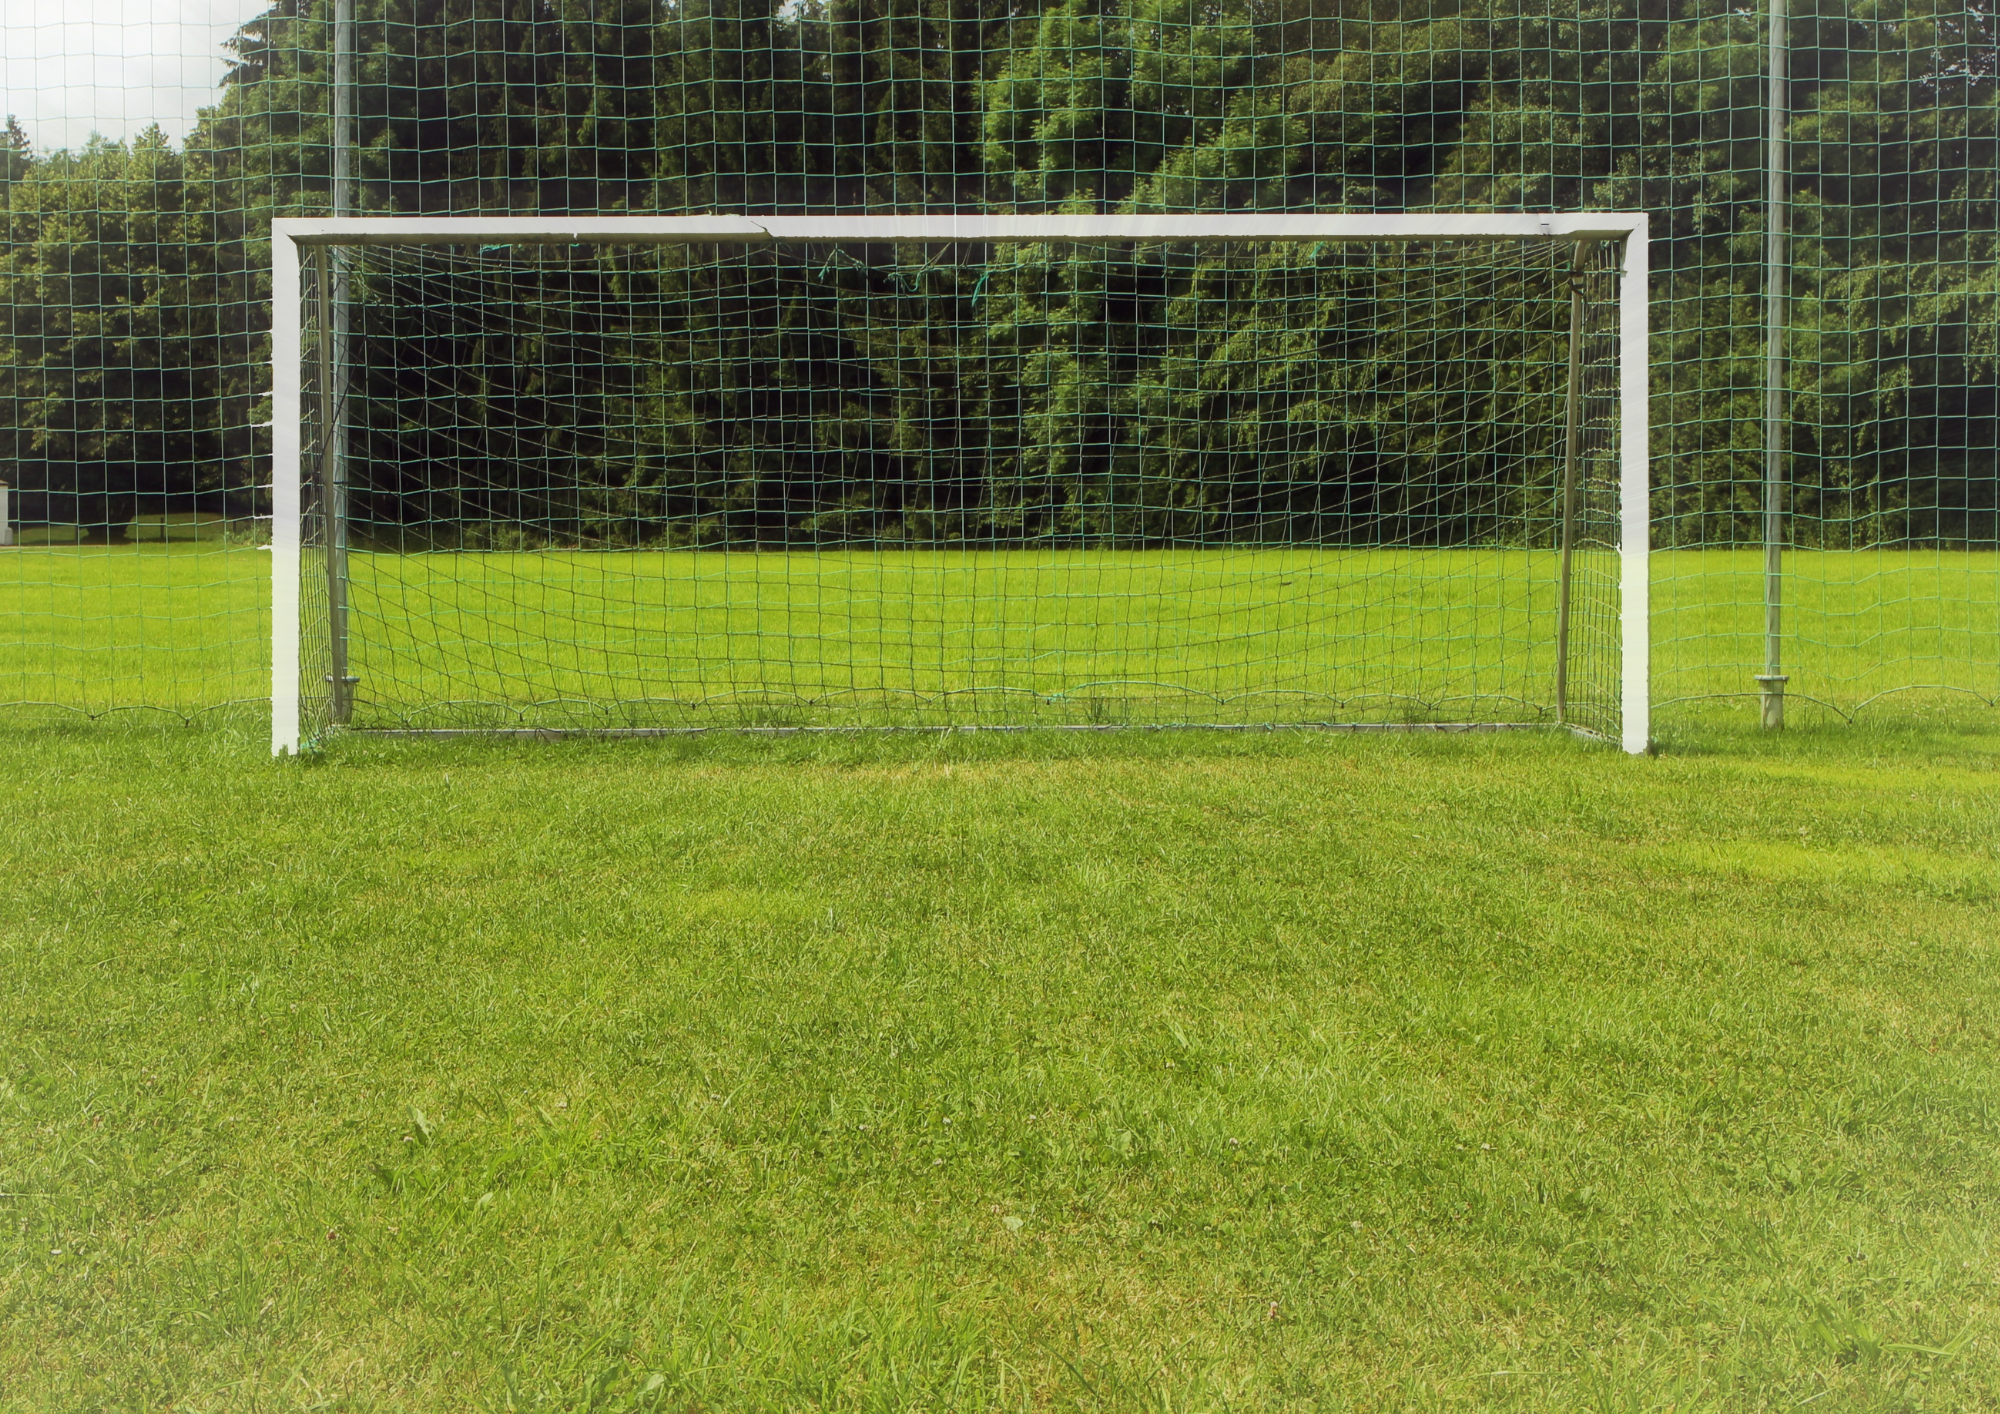 Football goal in a field.